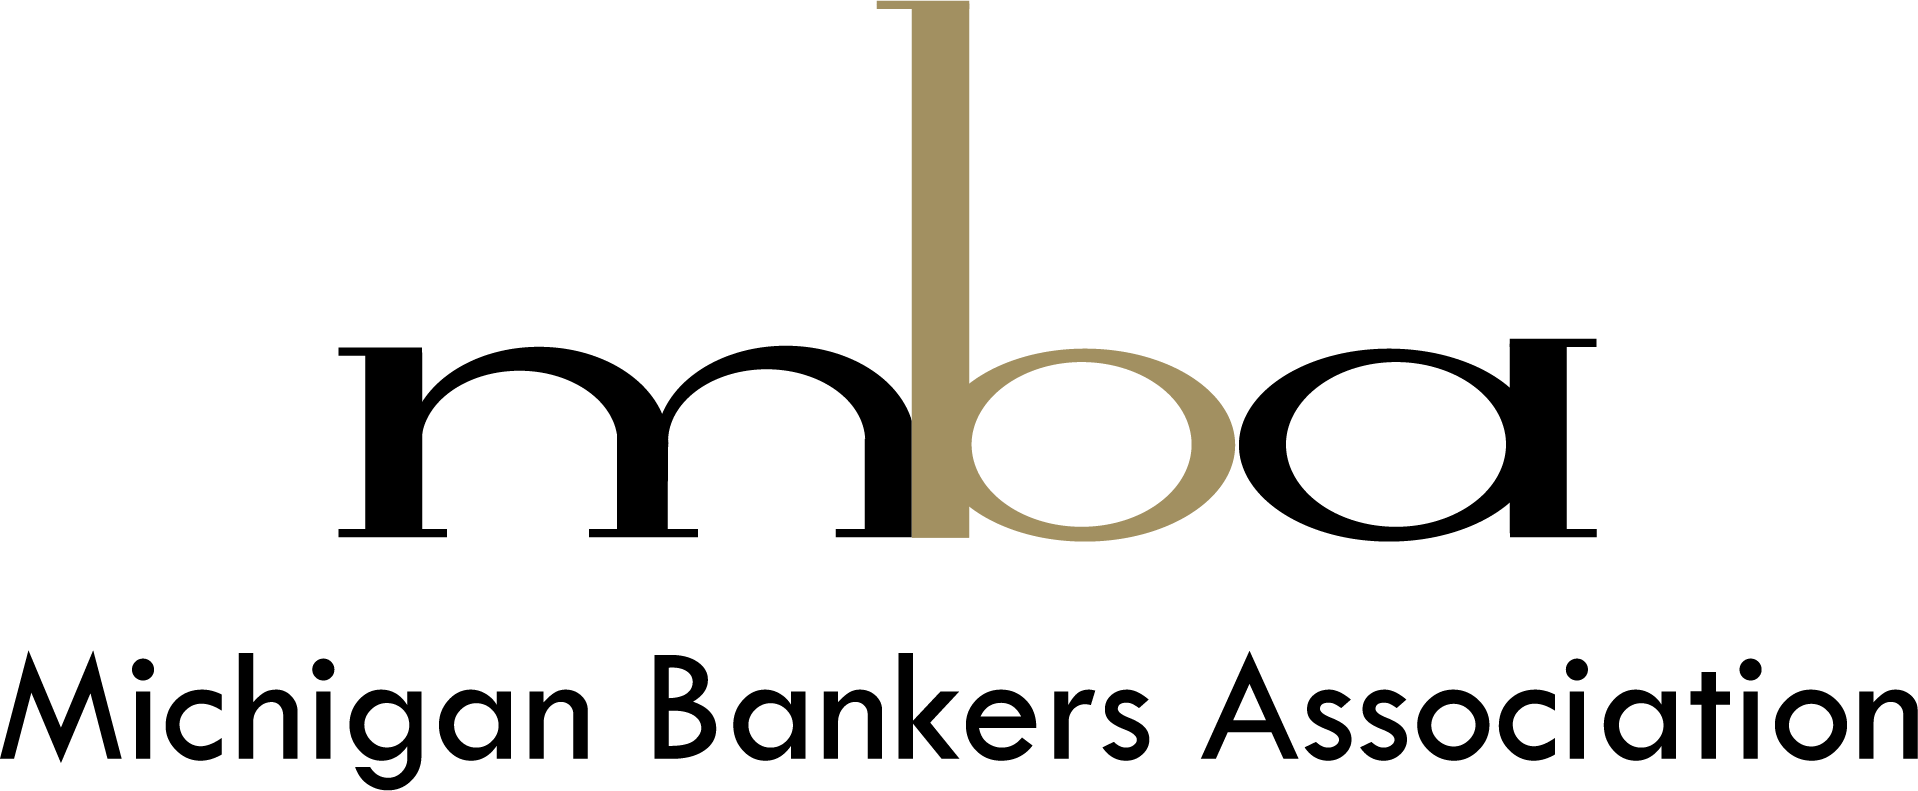 Michigan Bankers Association logo